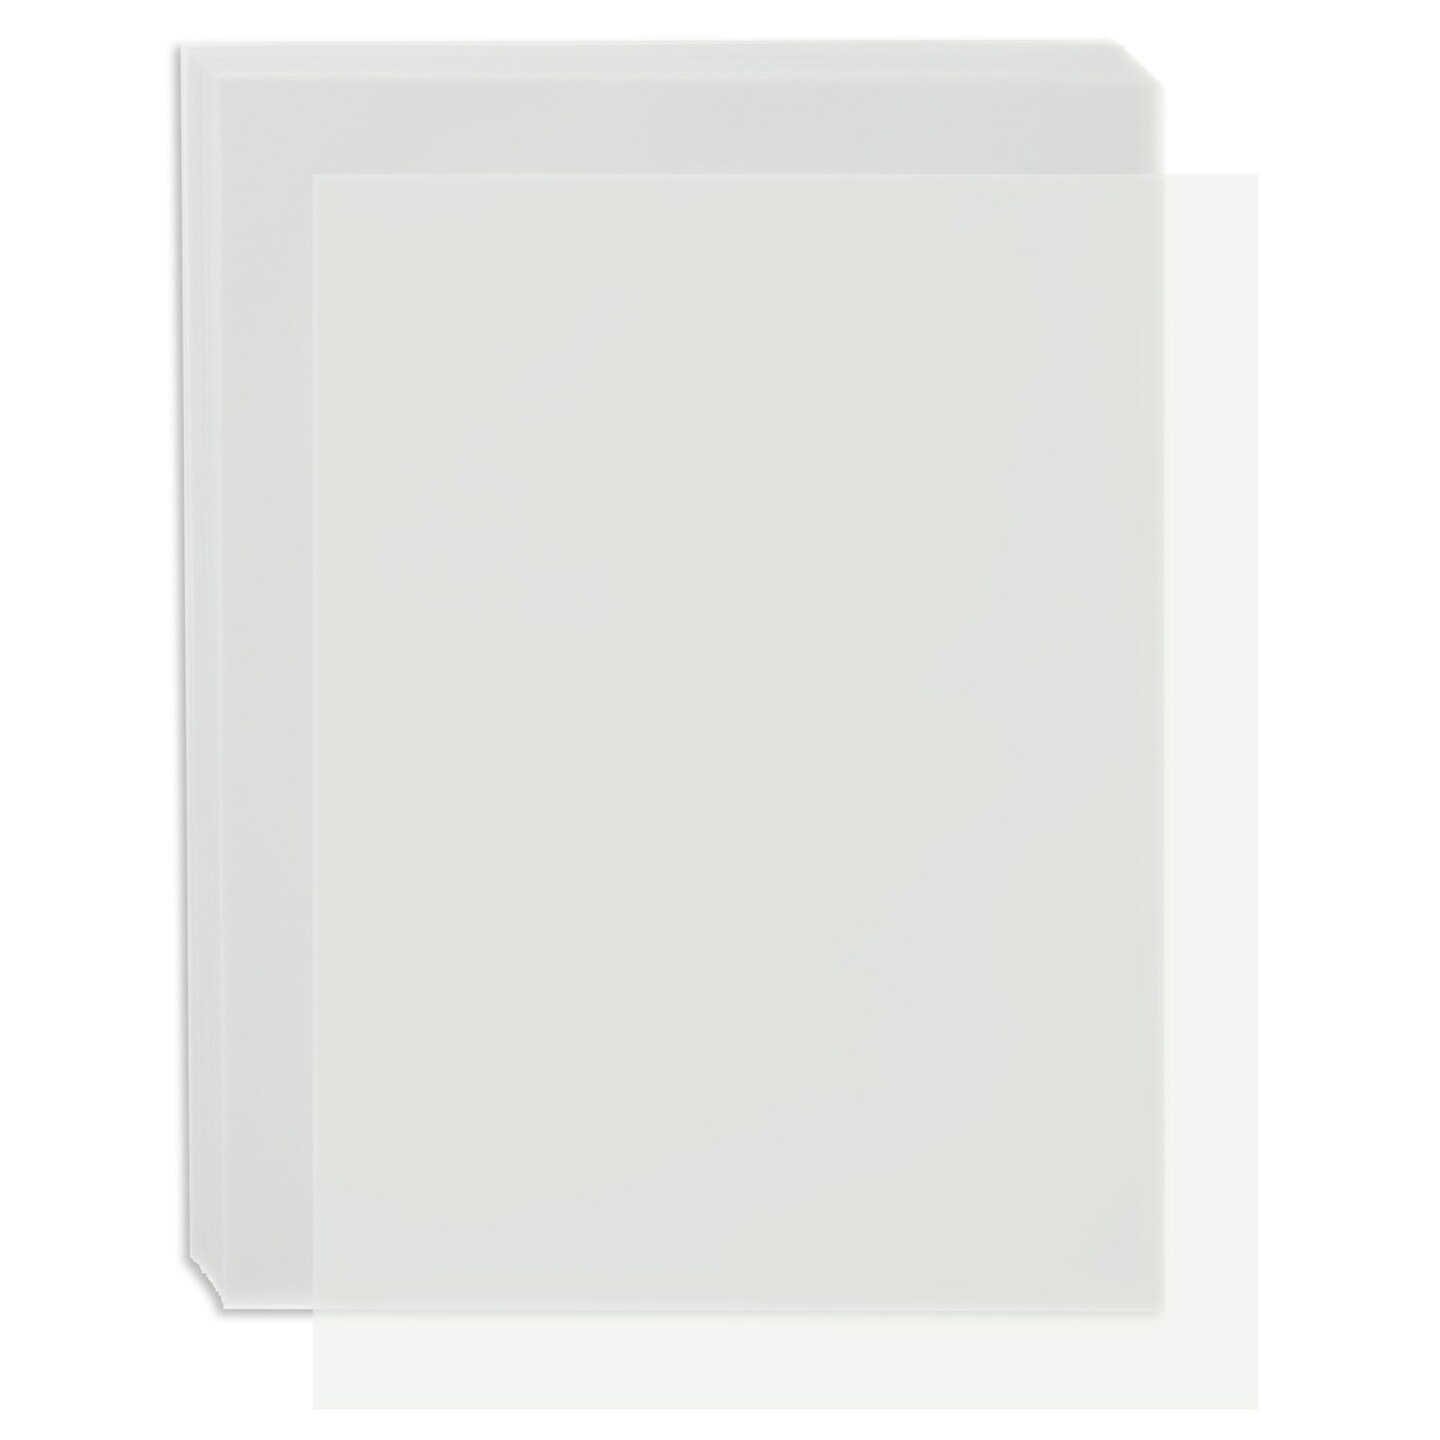  Vellum Paper 8.5 x 11 Translucent Printable (100 Sheets) -  Translucent Vellum Paper - Clear Vellum Paper - Vellum Tracing Paper 8.5 x  11 - Vellum Paper for Invitations - Vegetal Paper - Trace Paper